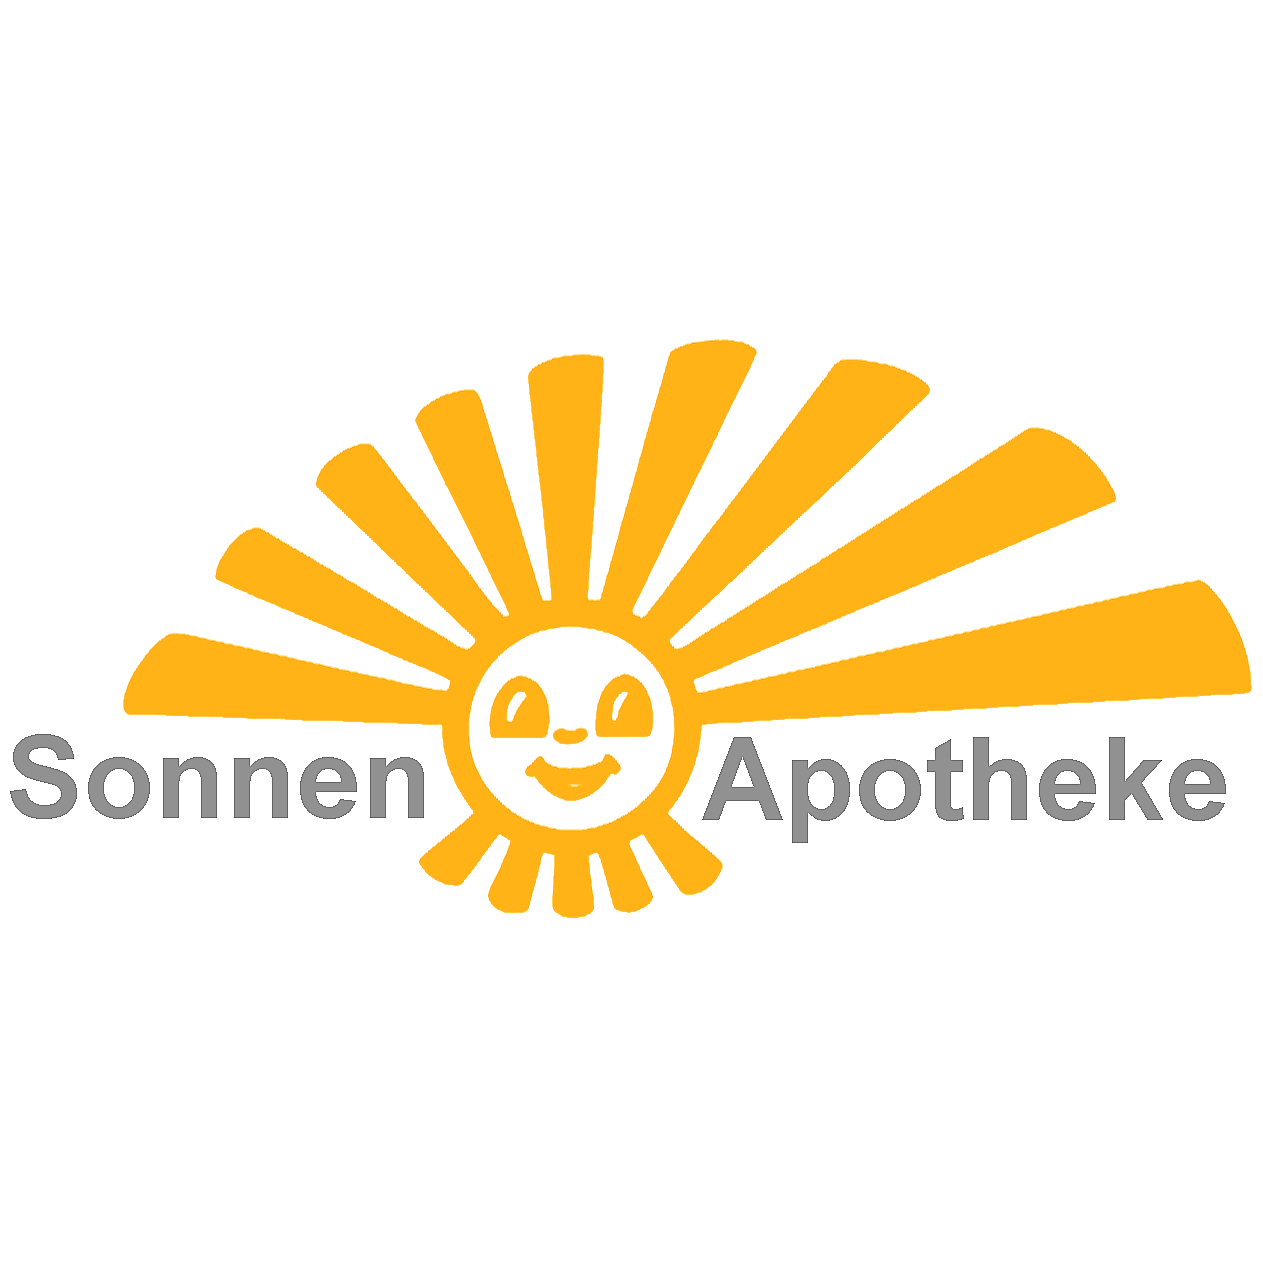 Sonnen-Apotheke in Marburg - Logo